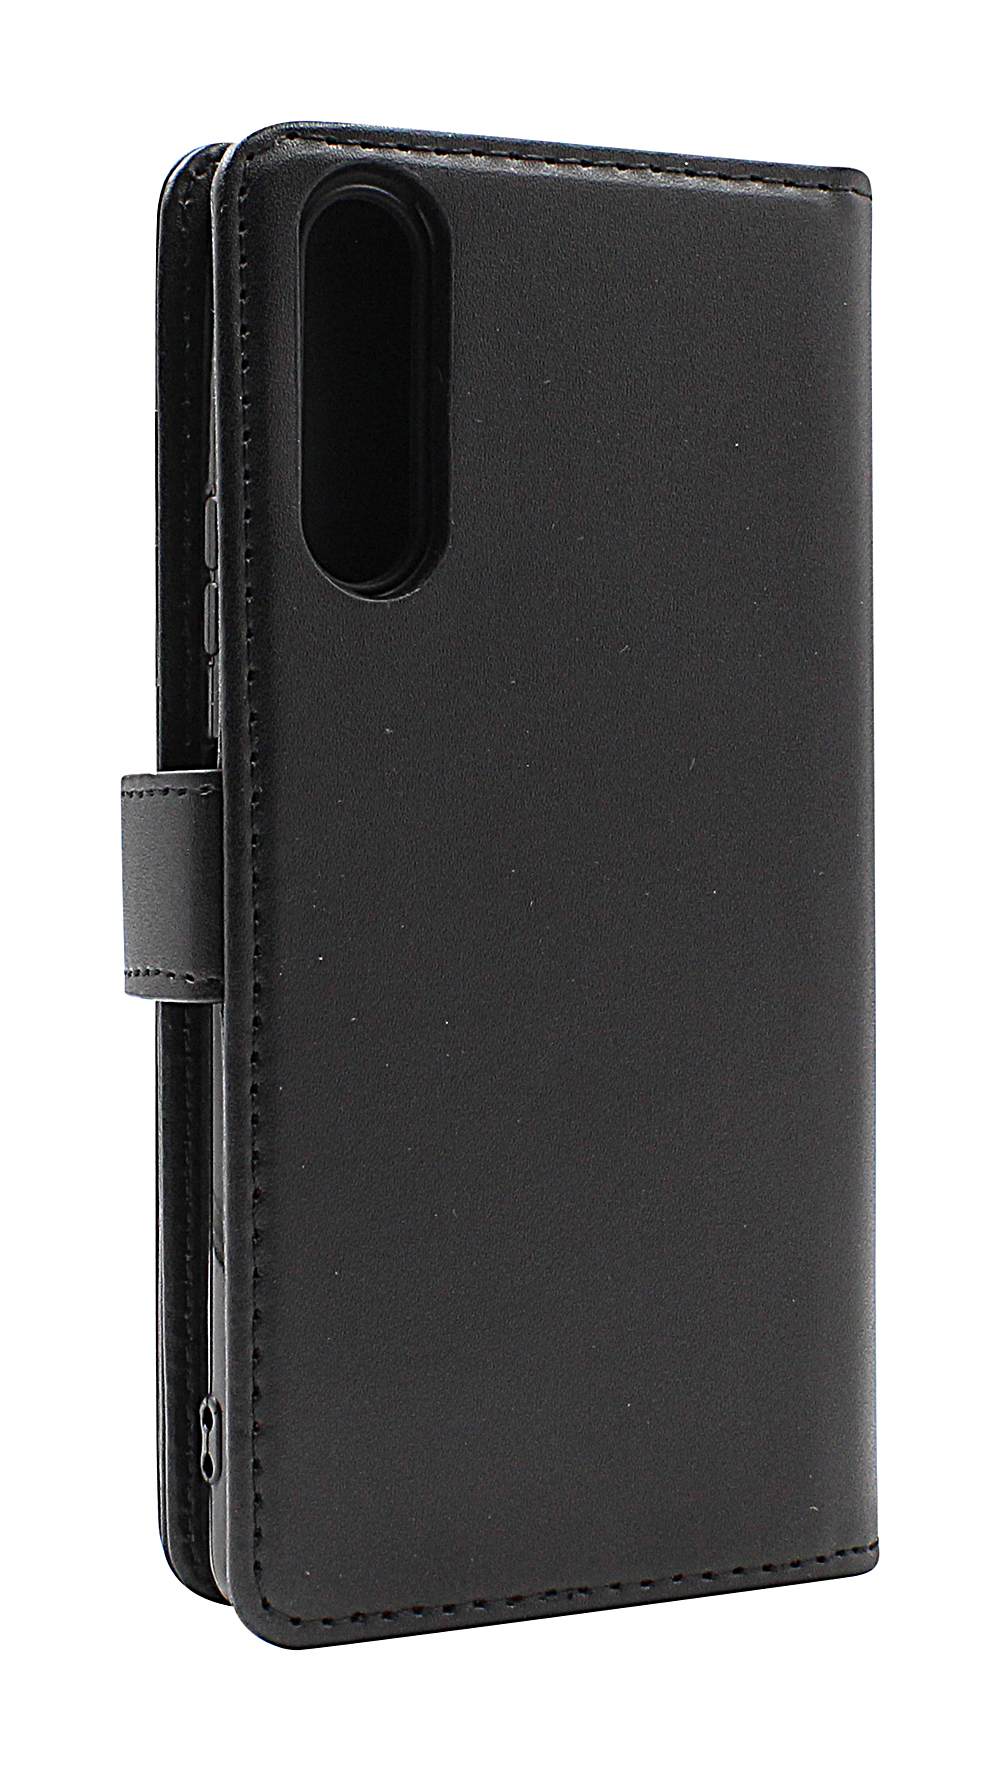 Skimblocker XL Magnet Wallet Sony Xperia 10 IV 5G (XQ-CC54)